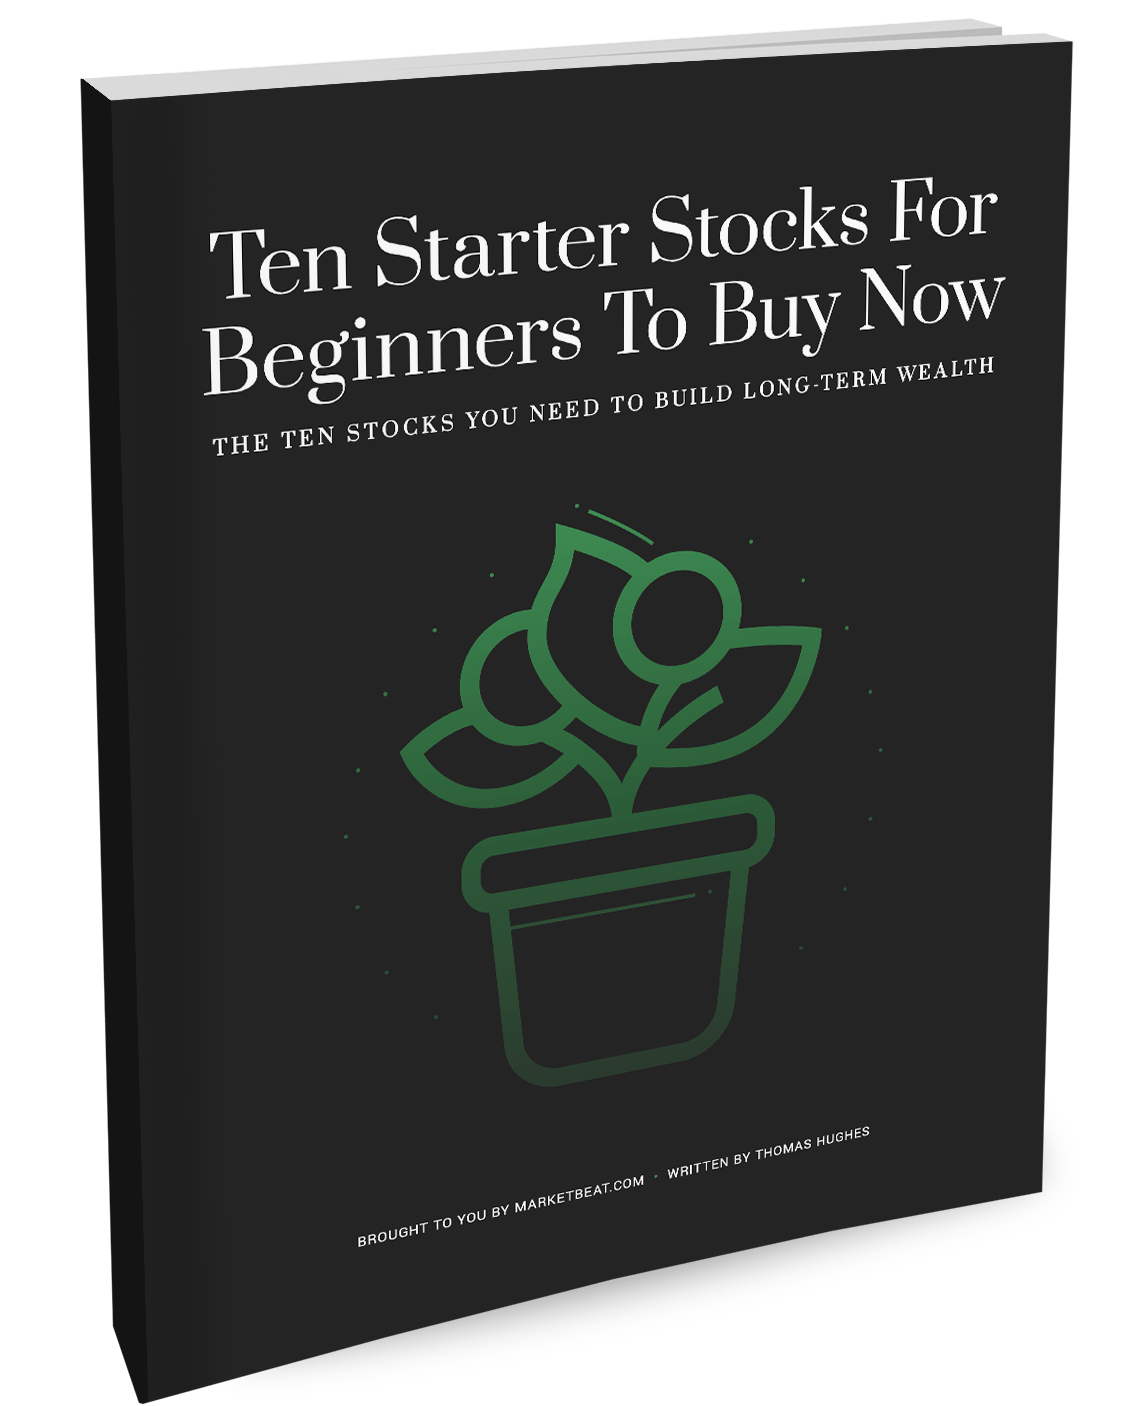 Ten startup stocks for beginners to buy now